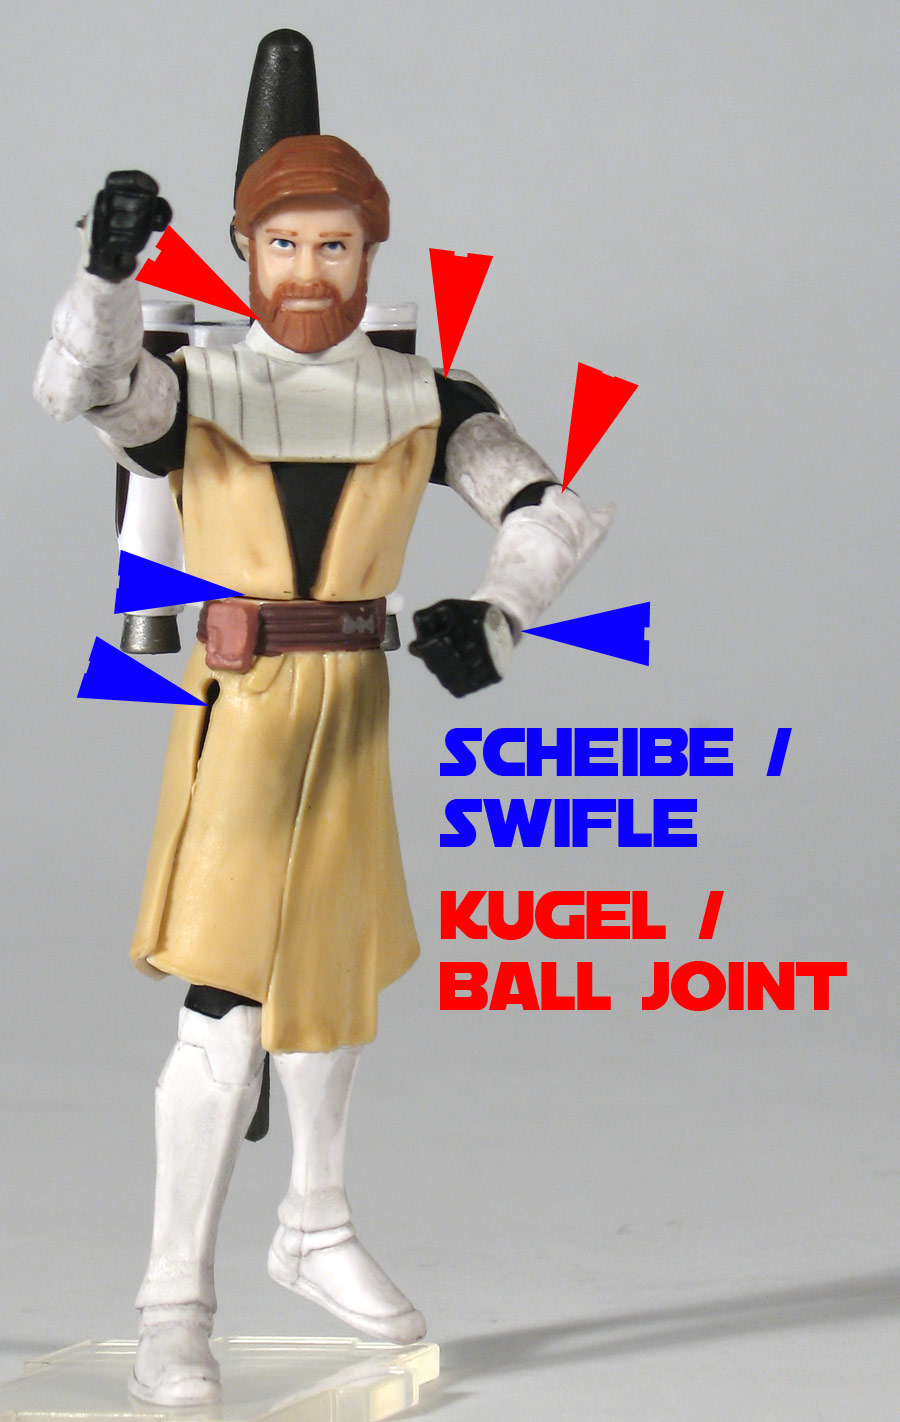 Obi-Wan Kenobi CW02 TCW